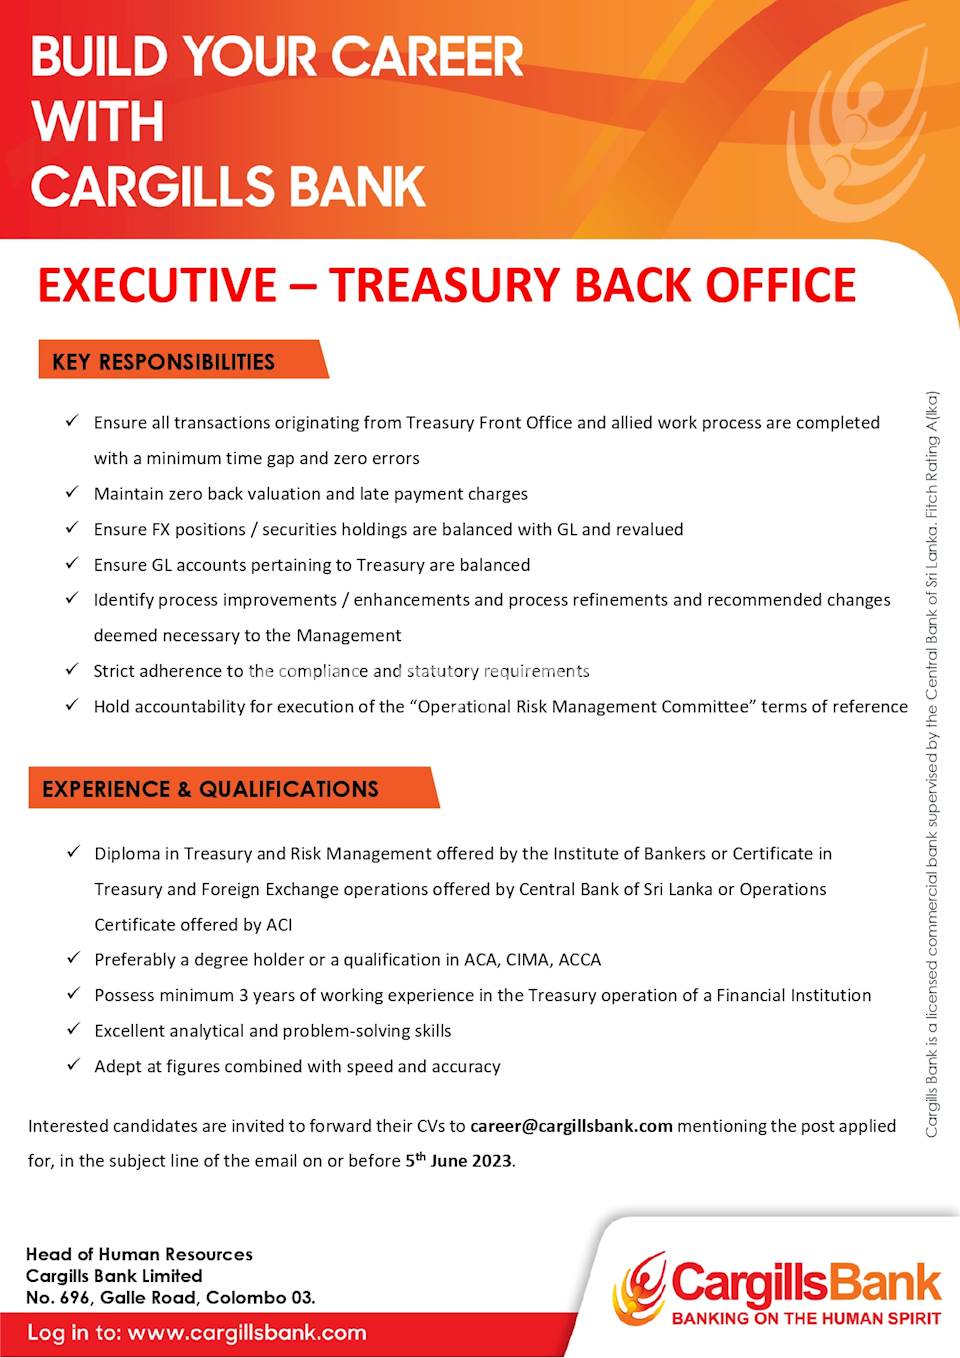 Executive - Treasury Back Office